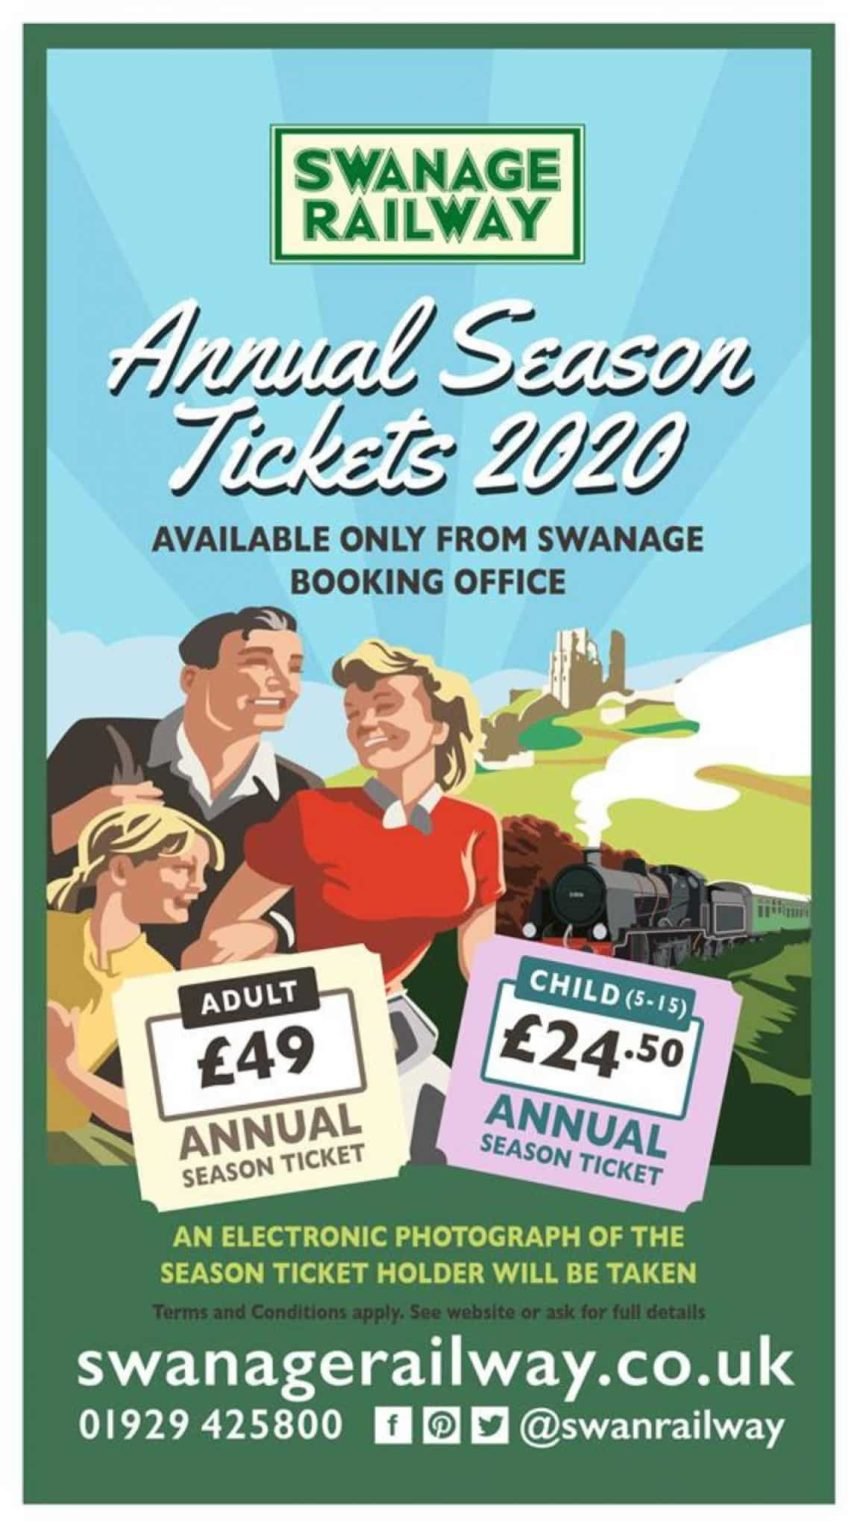 Annual Season Ticket // Credit Swanage Railway